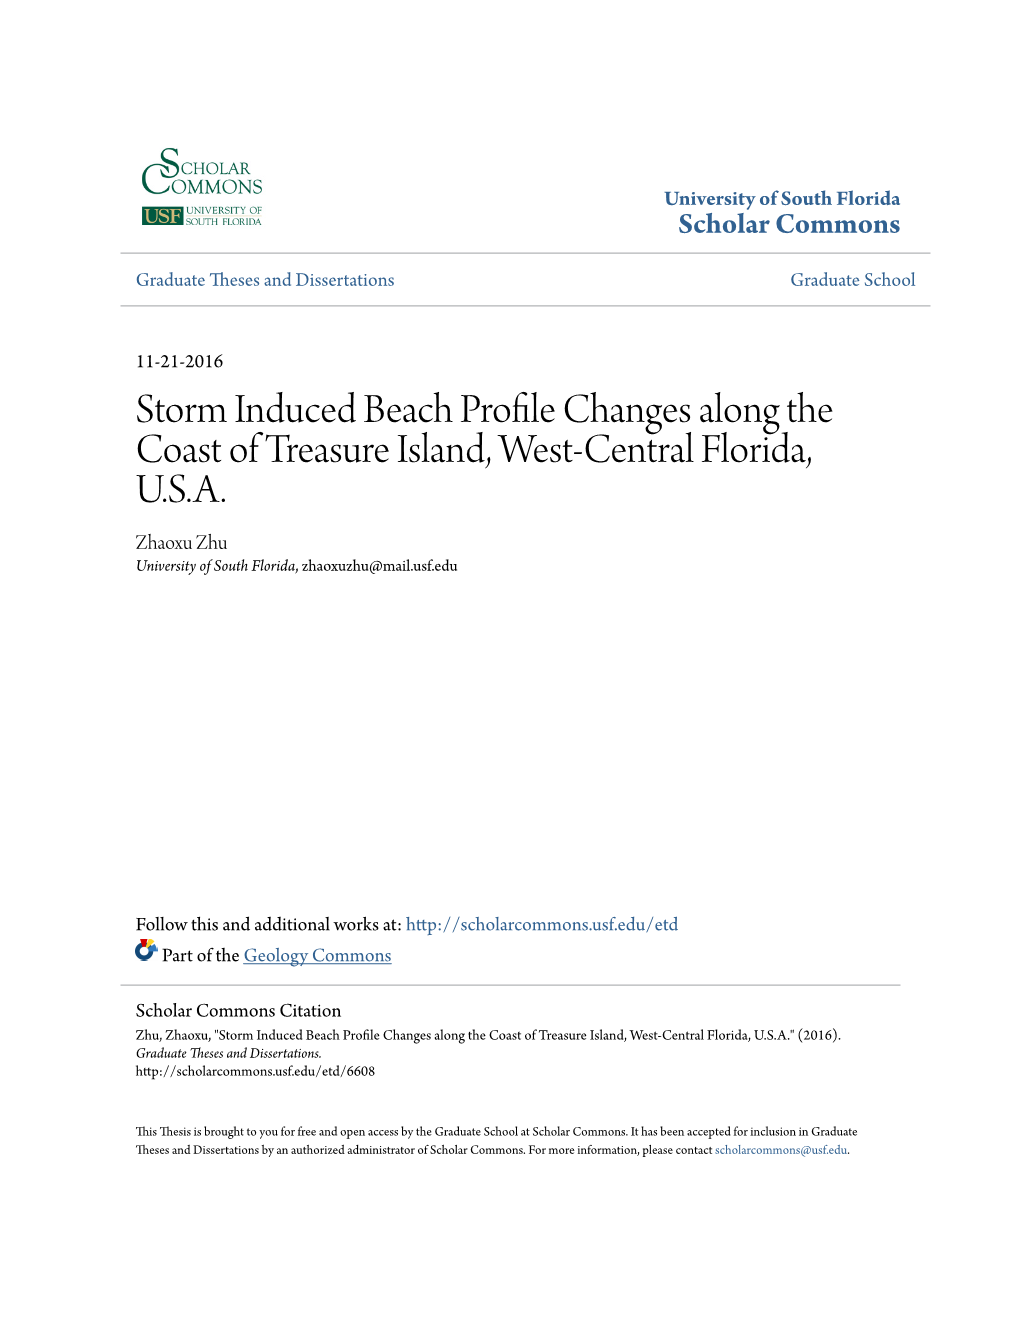 Storm Induced Beach Profile Changes Along the Coast of Treasure Island, West-Central Florida, U.S.A. Zhaoxu Zhu University of South Florida, Zhaoxuzhu@Mail.Usf.Edu